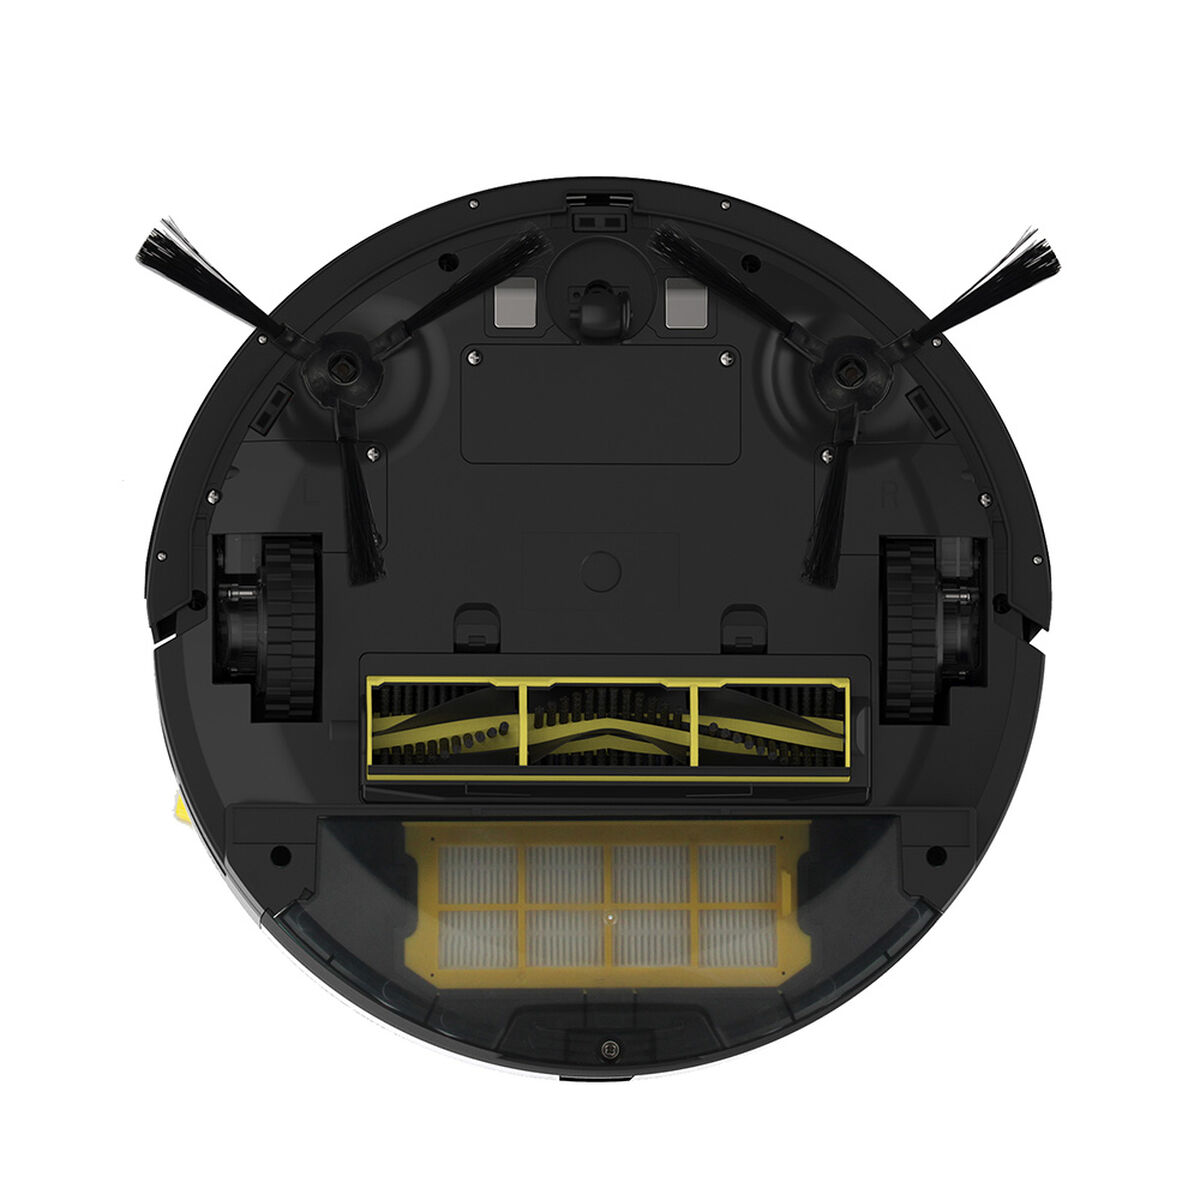 Aspiradora y Mopa Robot Thomas TH-1150SCL LaserNav WiFi